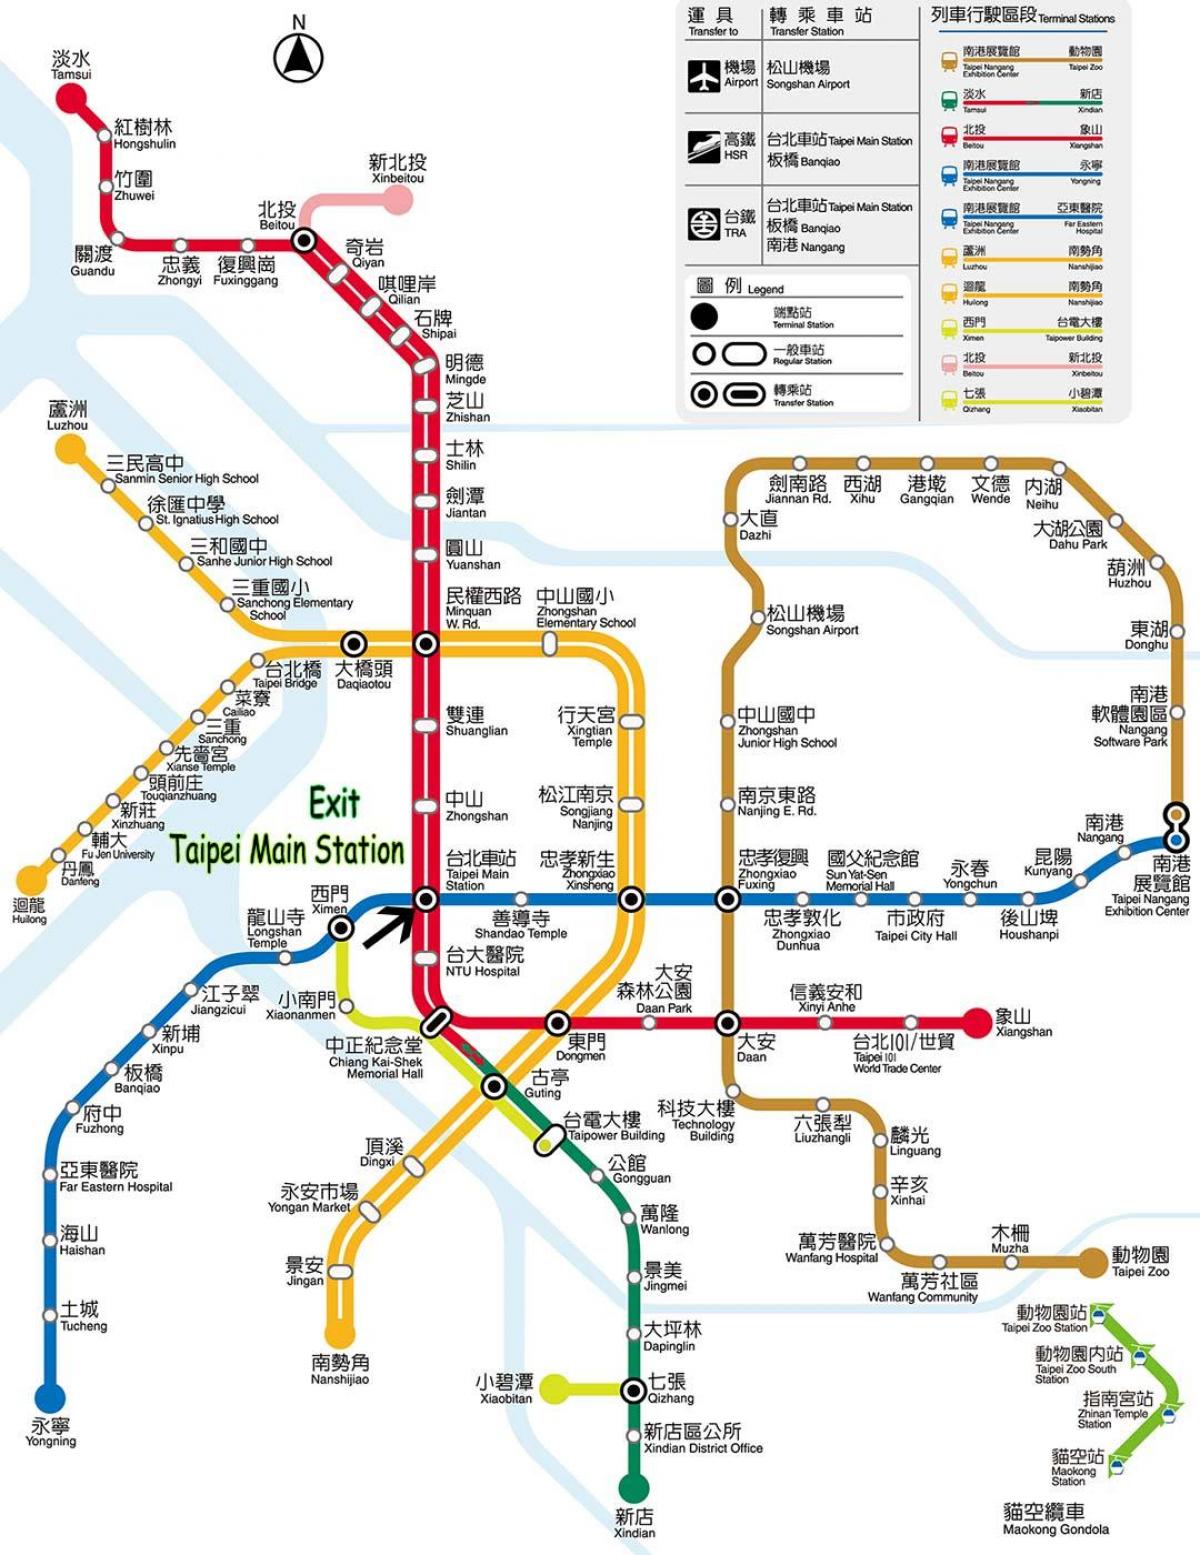 Taipei ana tren istasyonu haritası